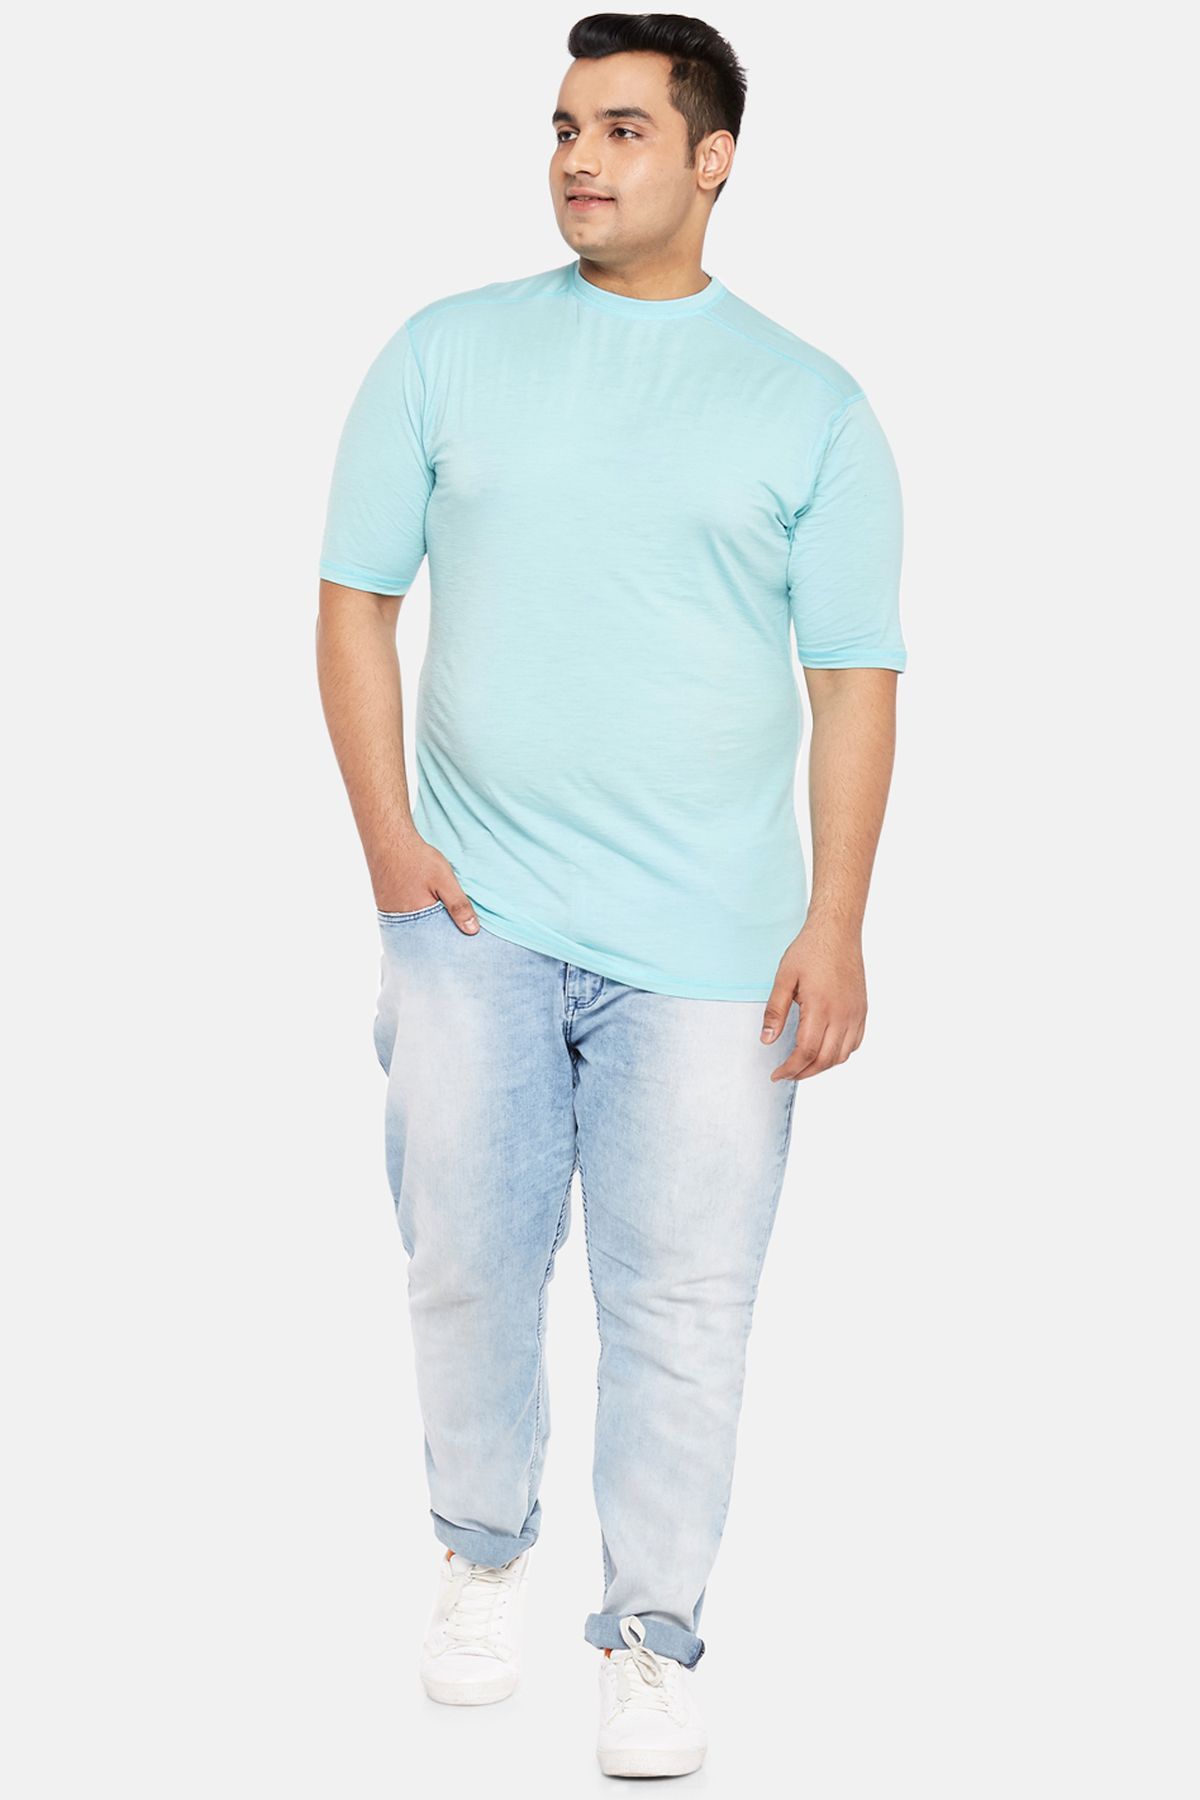 Men's Aqua Merino-Bamboo Half Sleeves Plus Size Thermal Vest